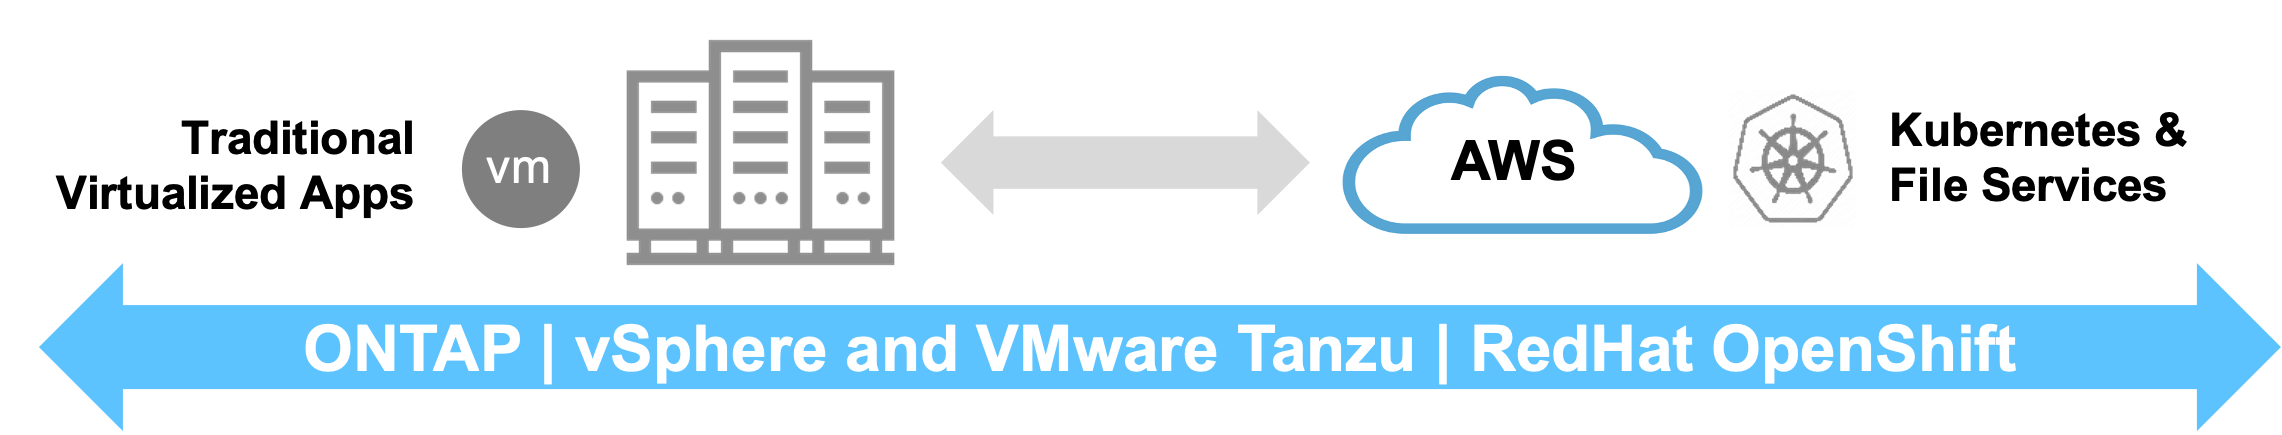 VMware 스토리 3a